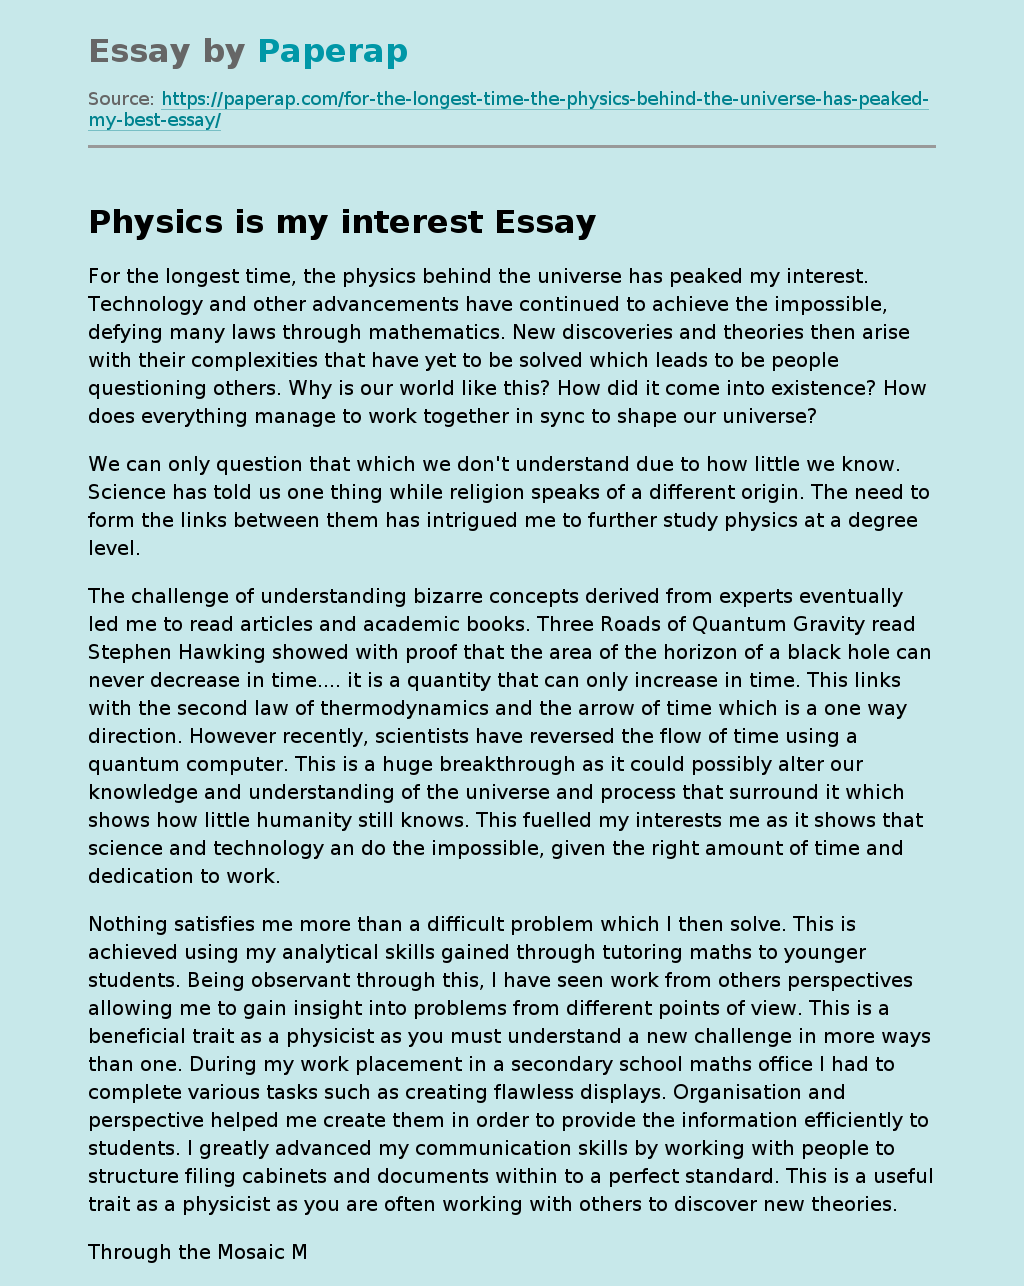 Physics is my interest